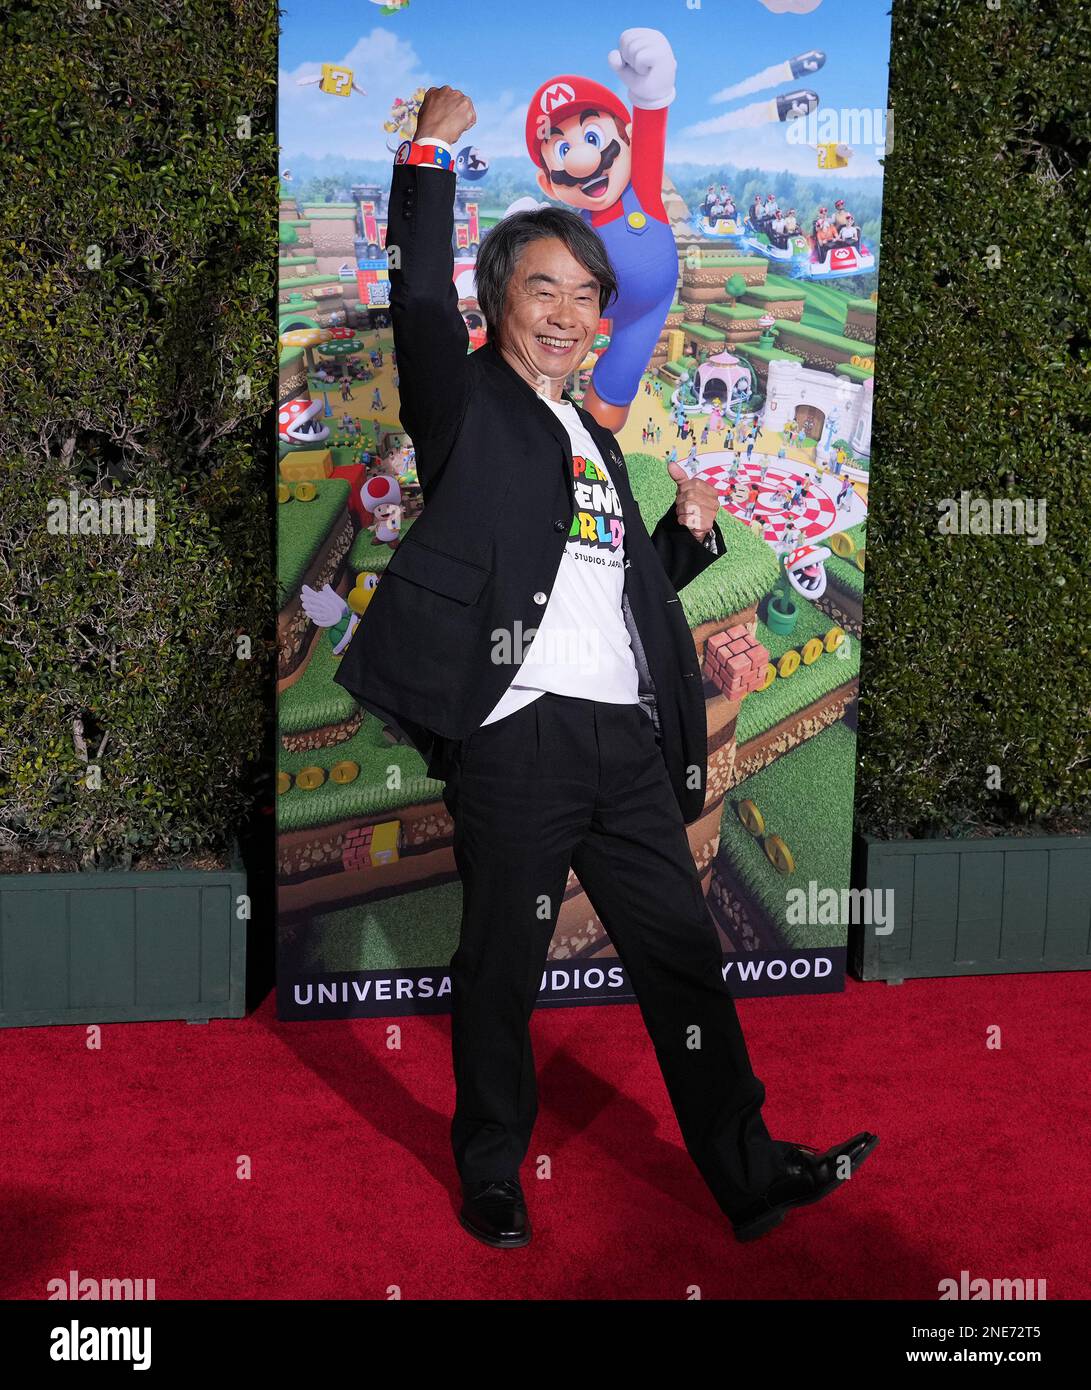 Shigeru Miyamoto talks Nintendo's return to the movie world